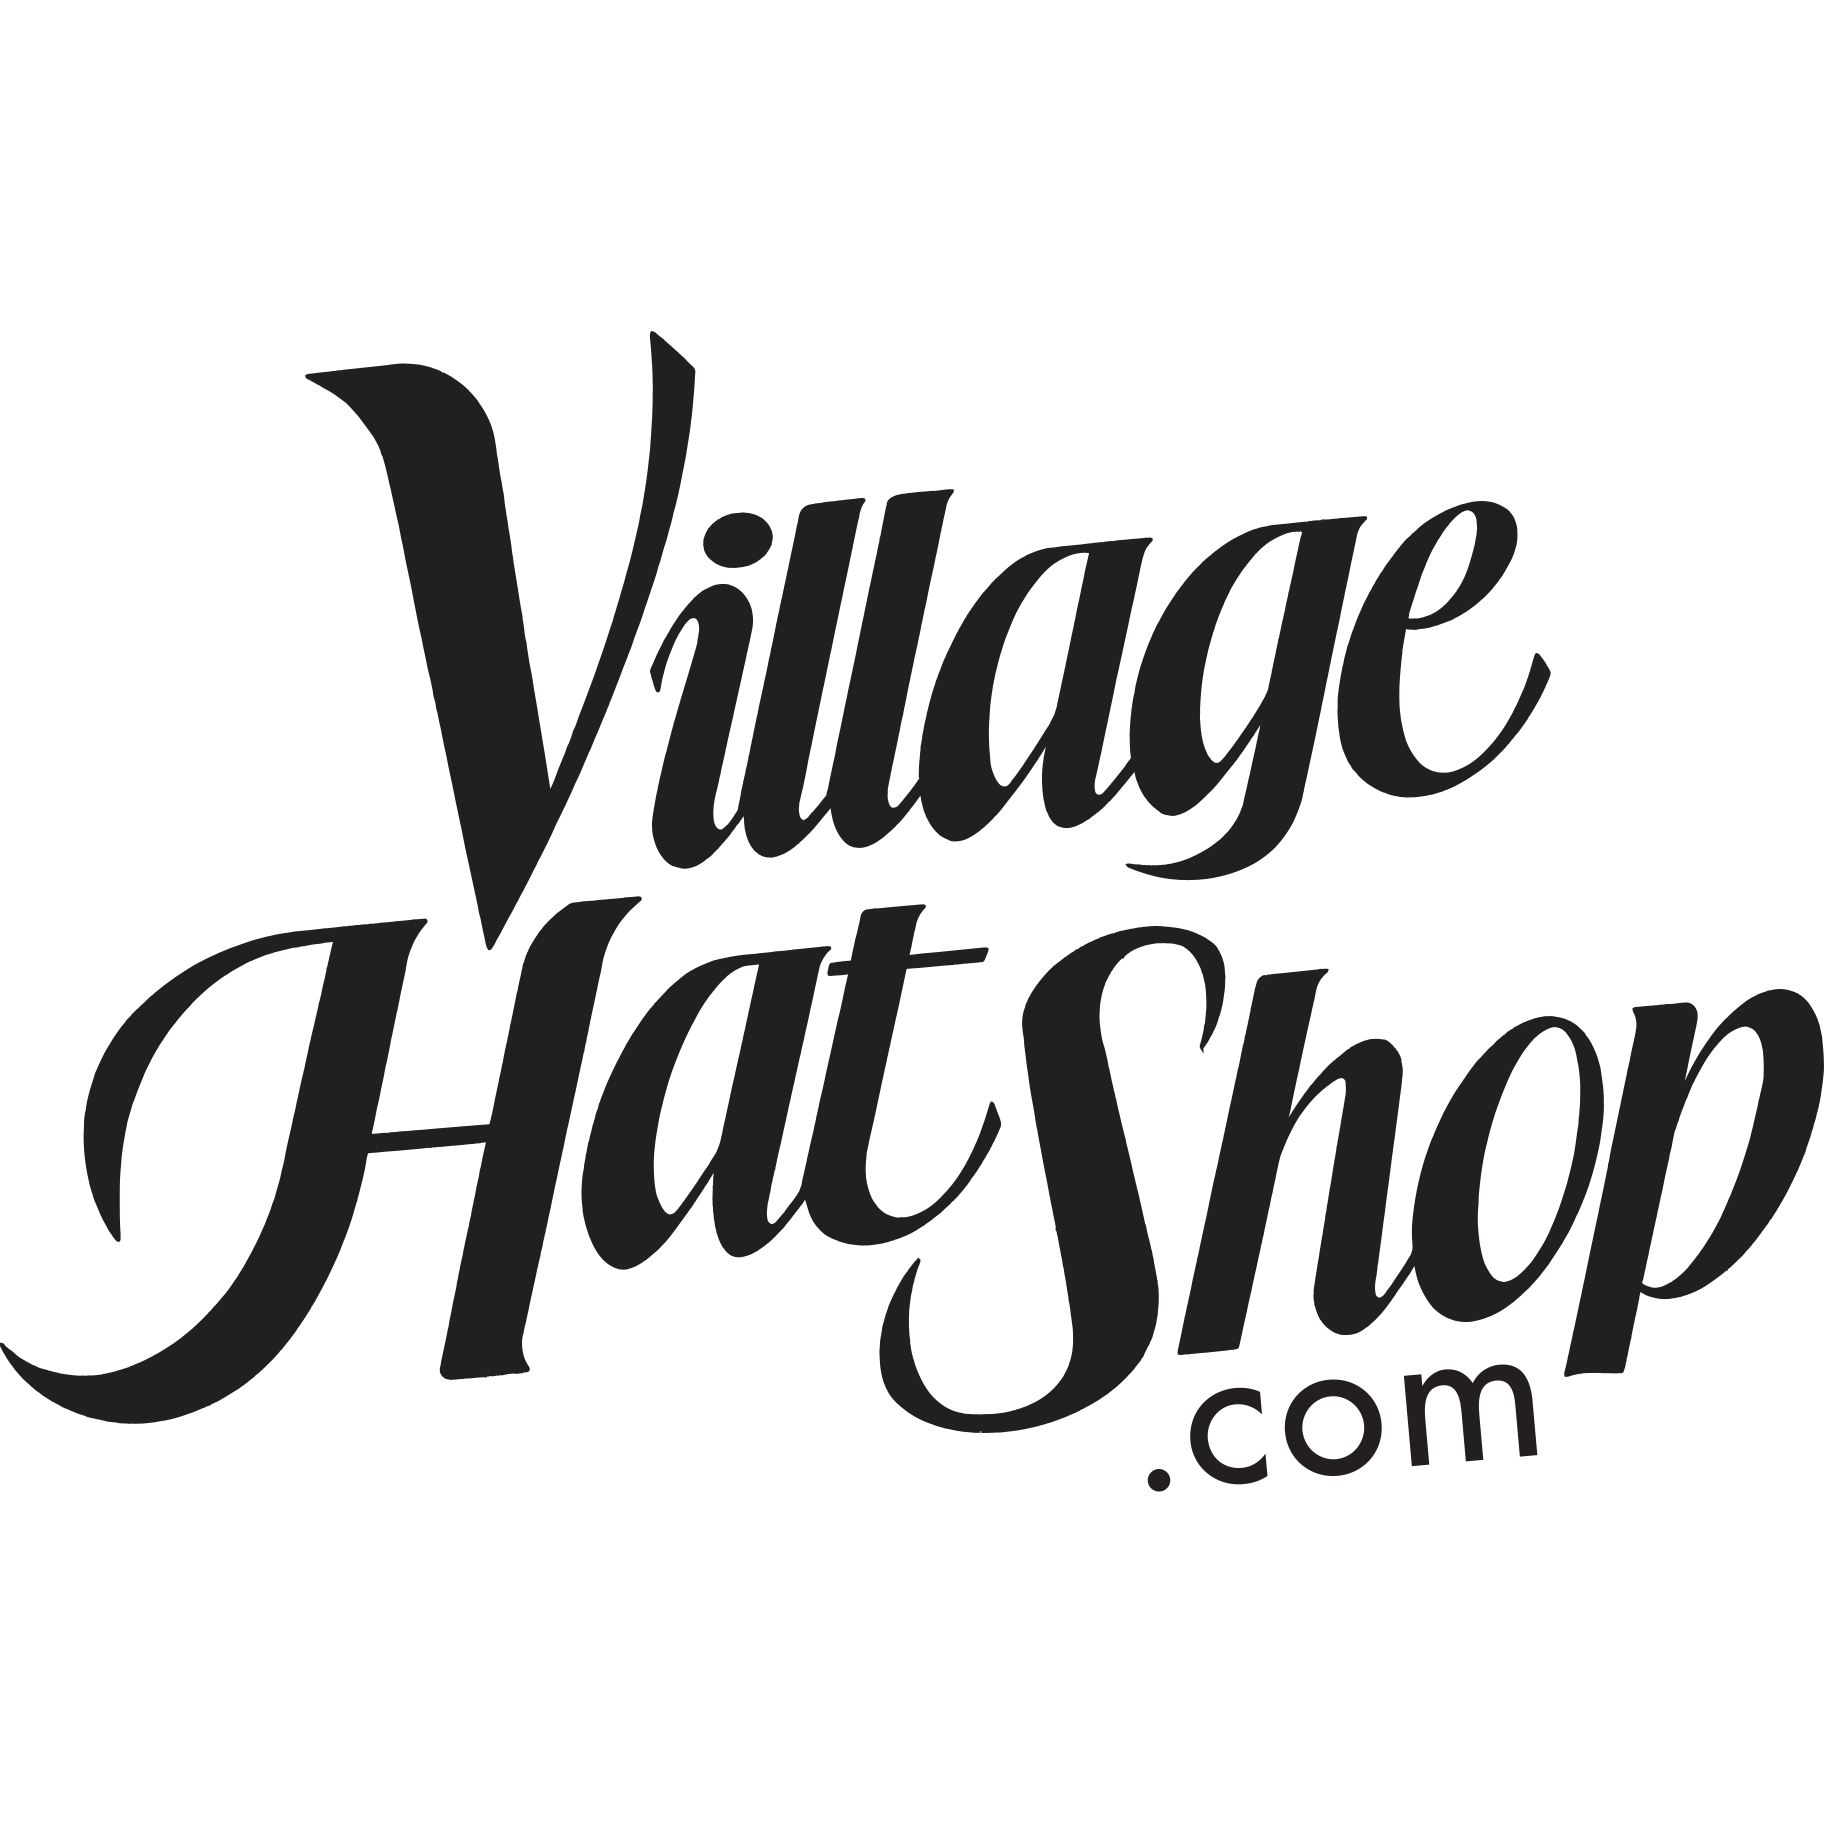 Village Hat Shop